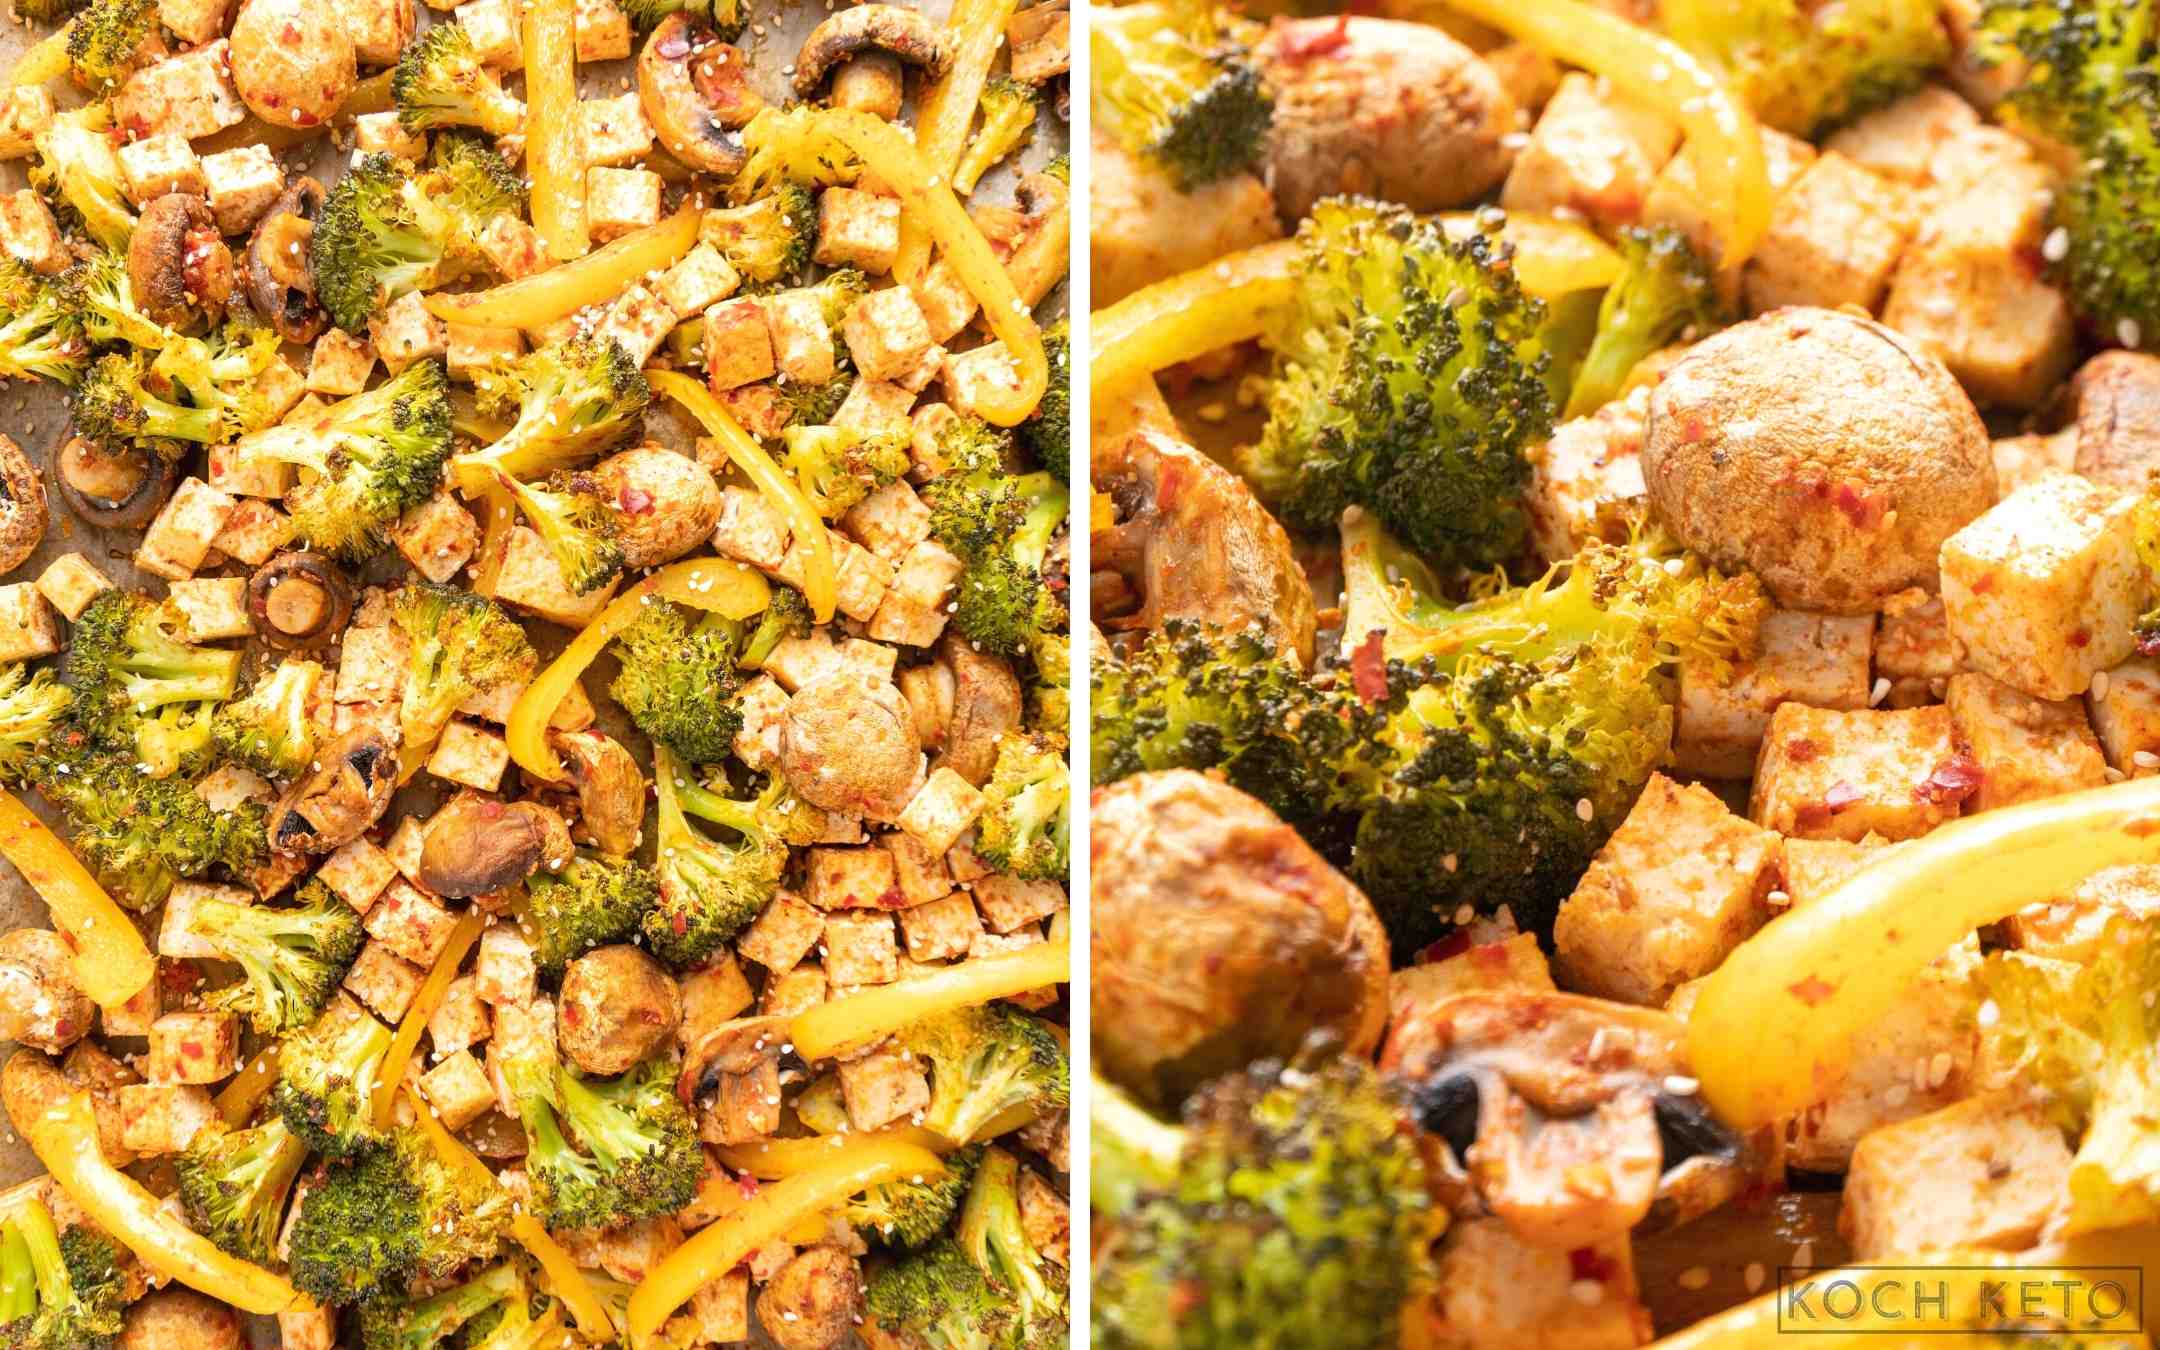 Veganes Low Carb Tofu-Gemüse-Blech mit Sambal Oelek zum ketogenen Abendessen ohne Kohlenhydrate Desktop Image Collage